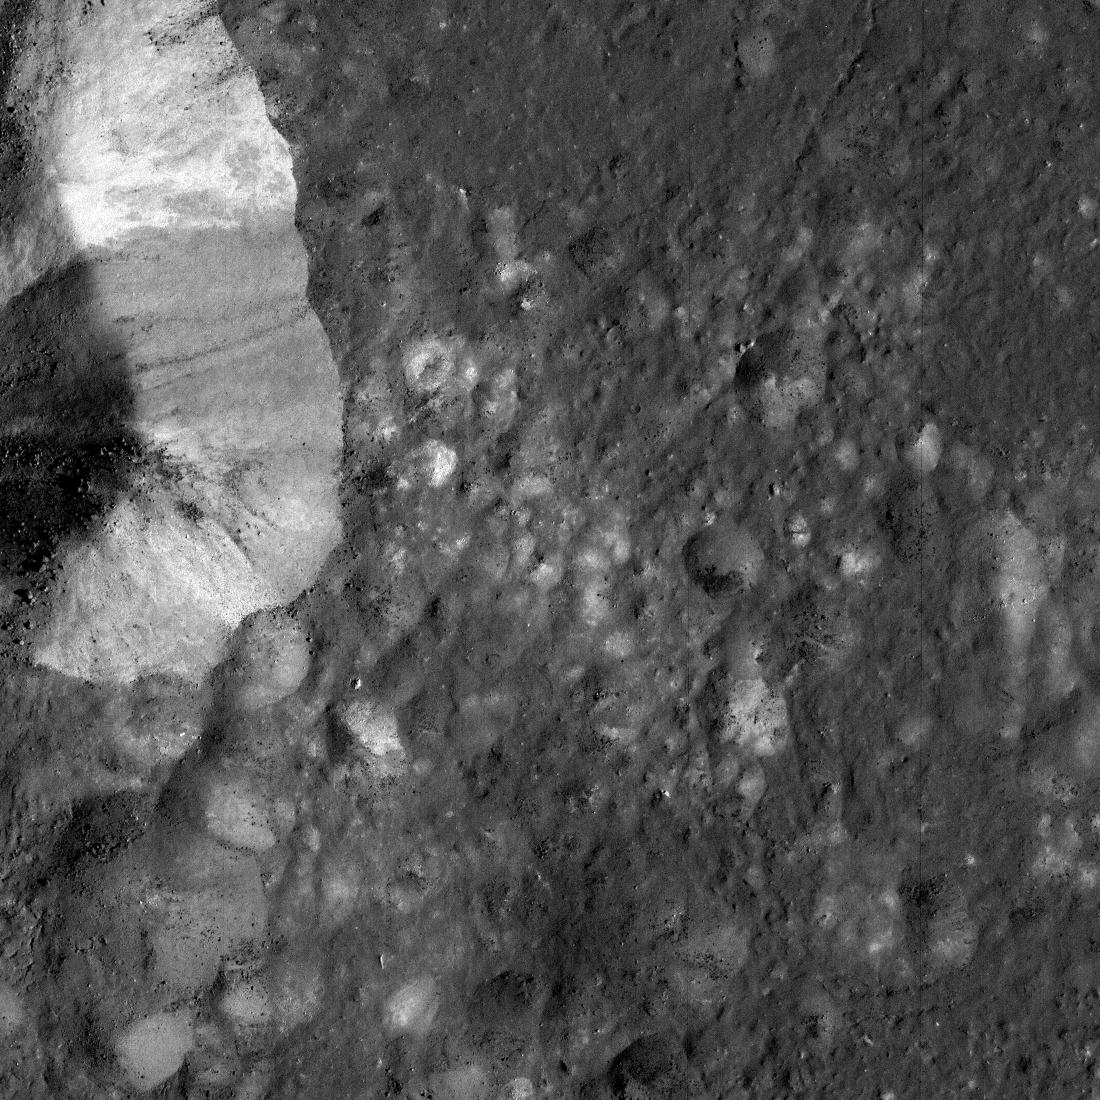 Aristarchus crater central peak seen under Earthshine